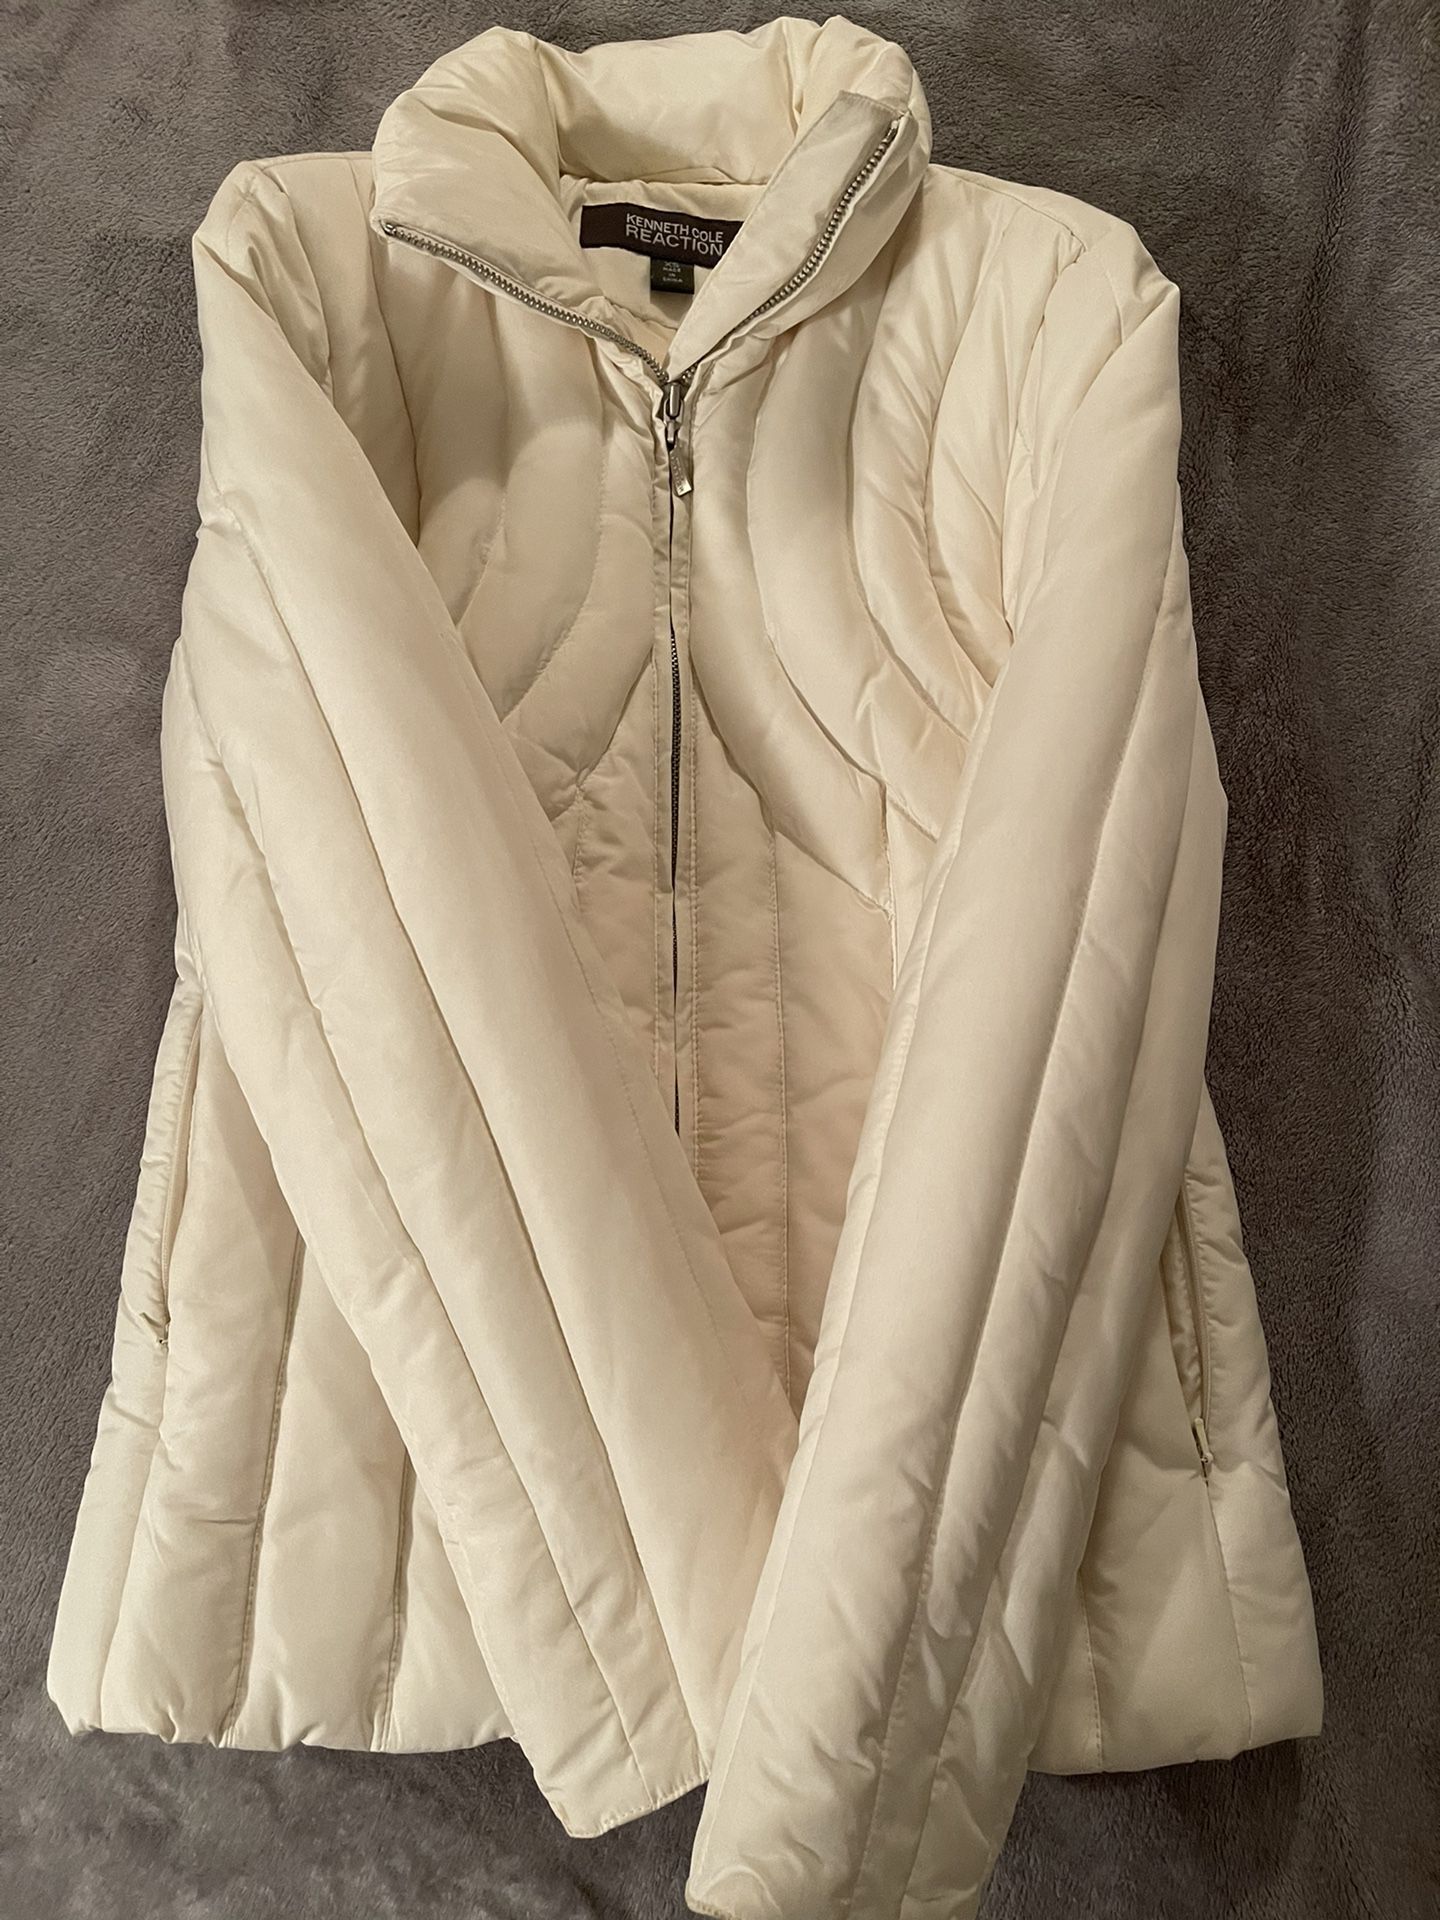 Off-white winter jacket